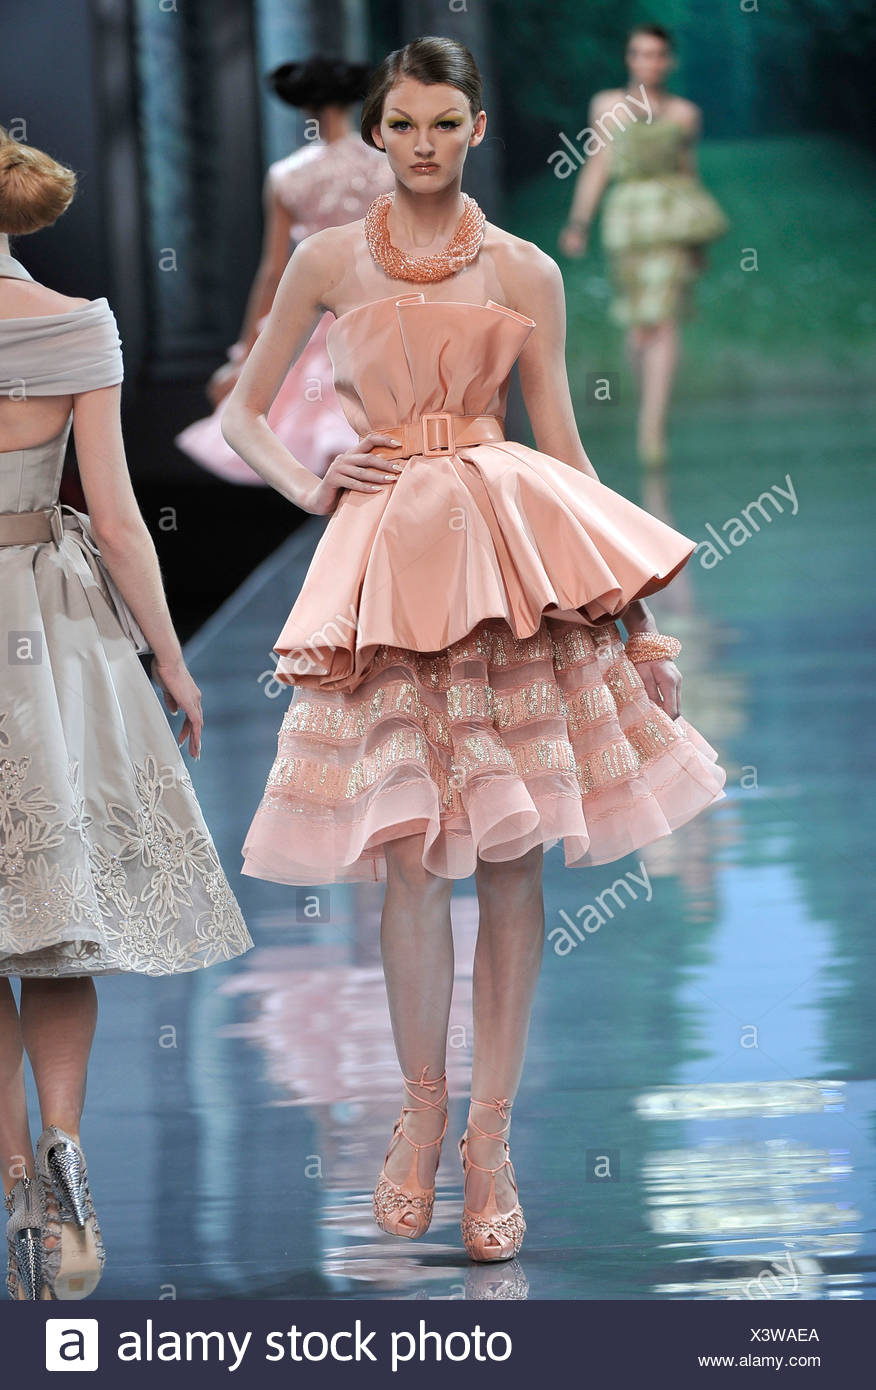 pink dior dress